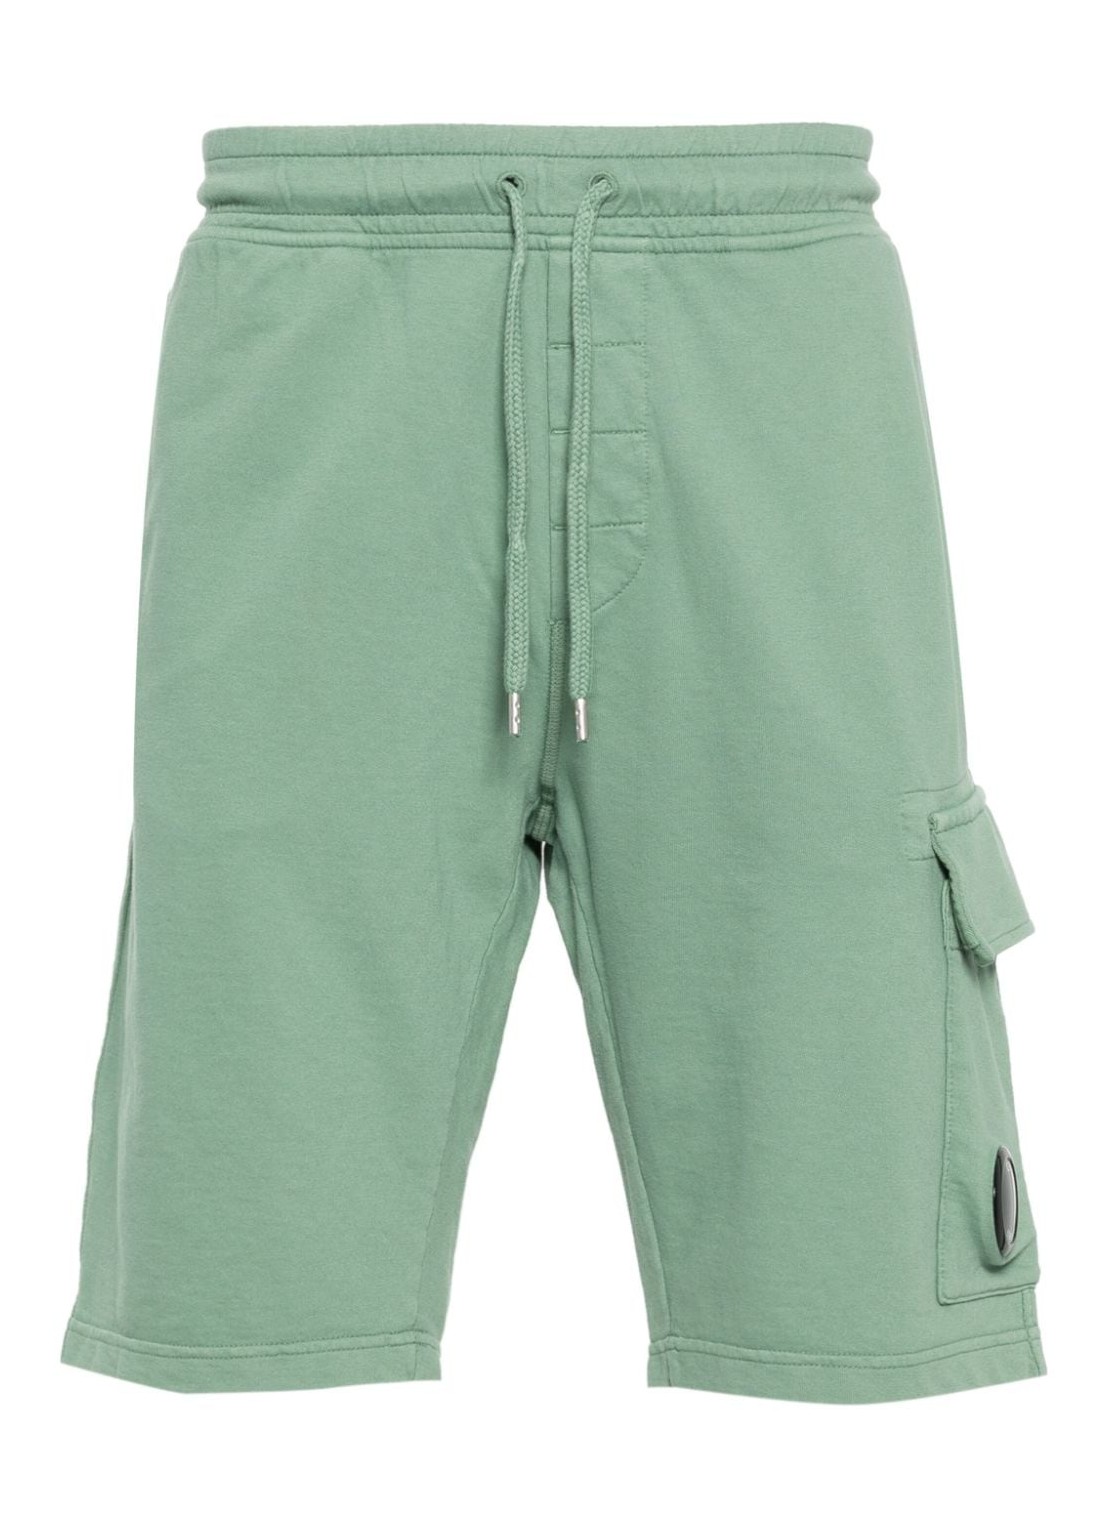 Pantalon corto c.p.company short pant man light fleece utility shorts 16cmsb021a002246g 626 talla ve